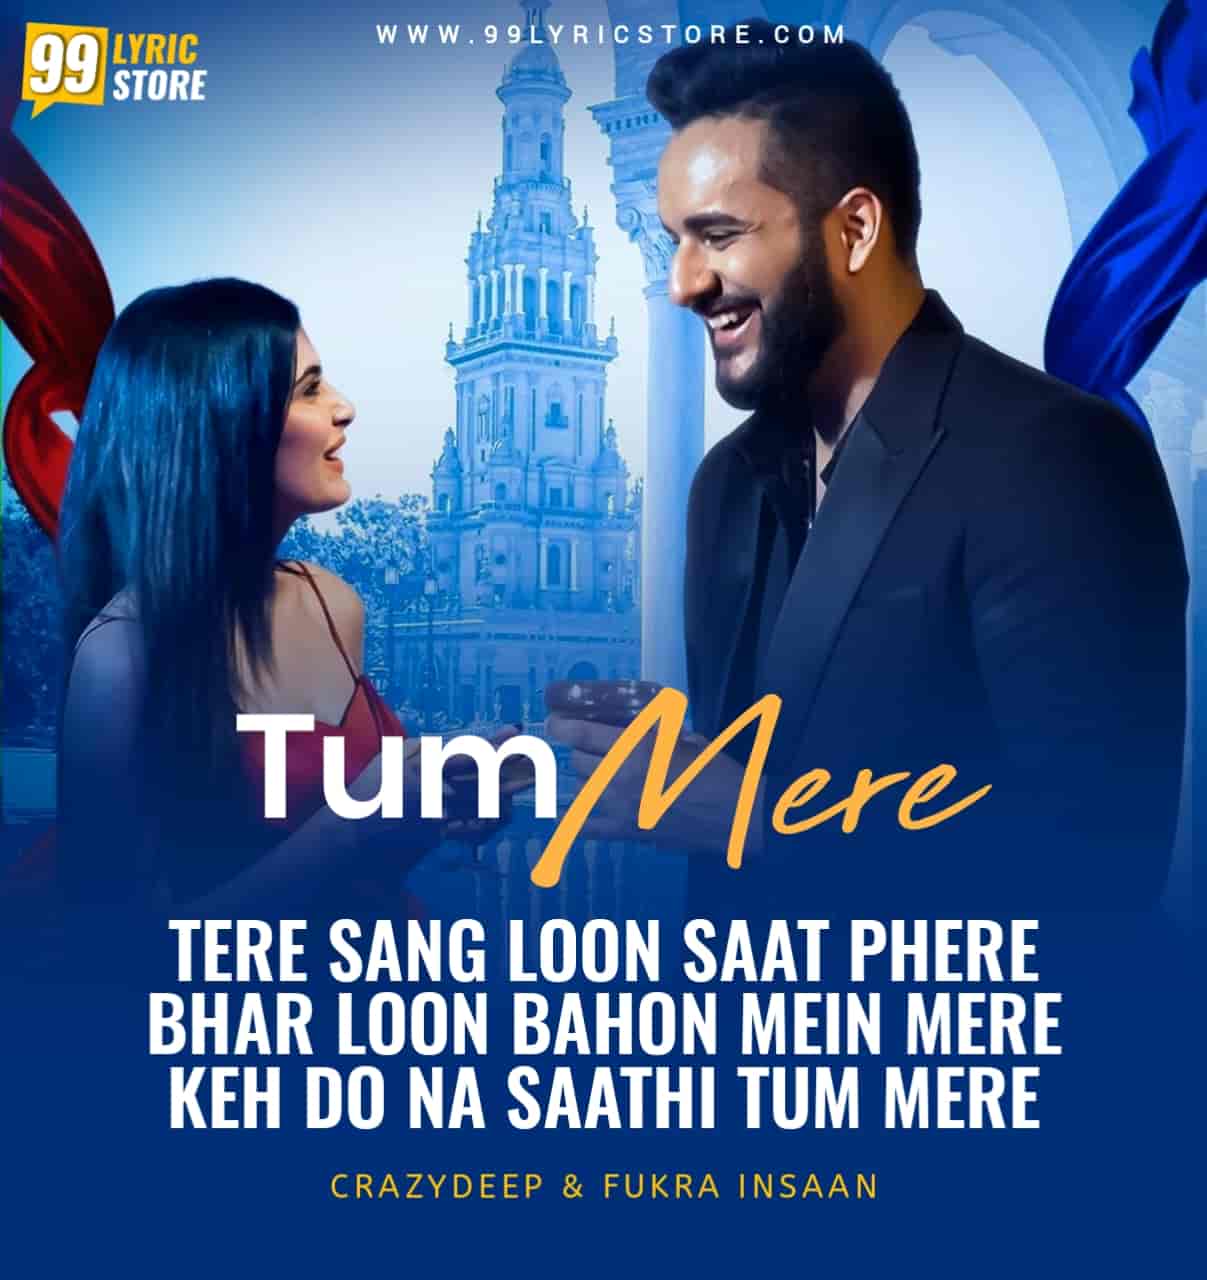 Tum Mere Song Image Features Fukra Insaan, Crazydeep